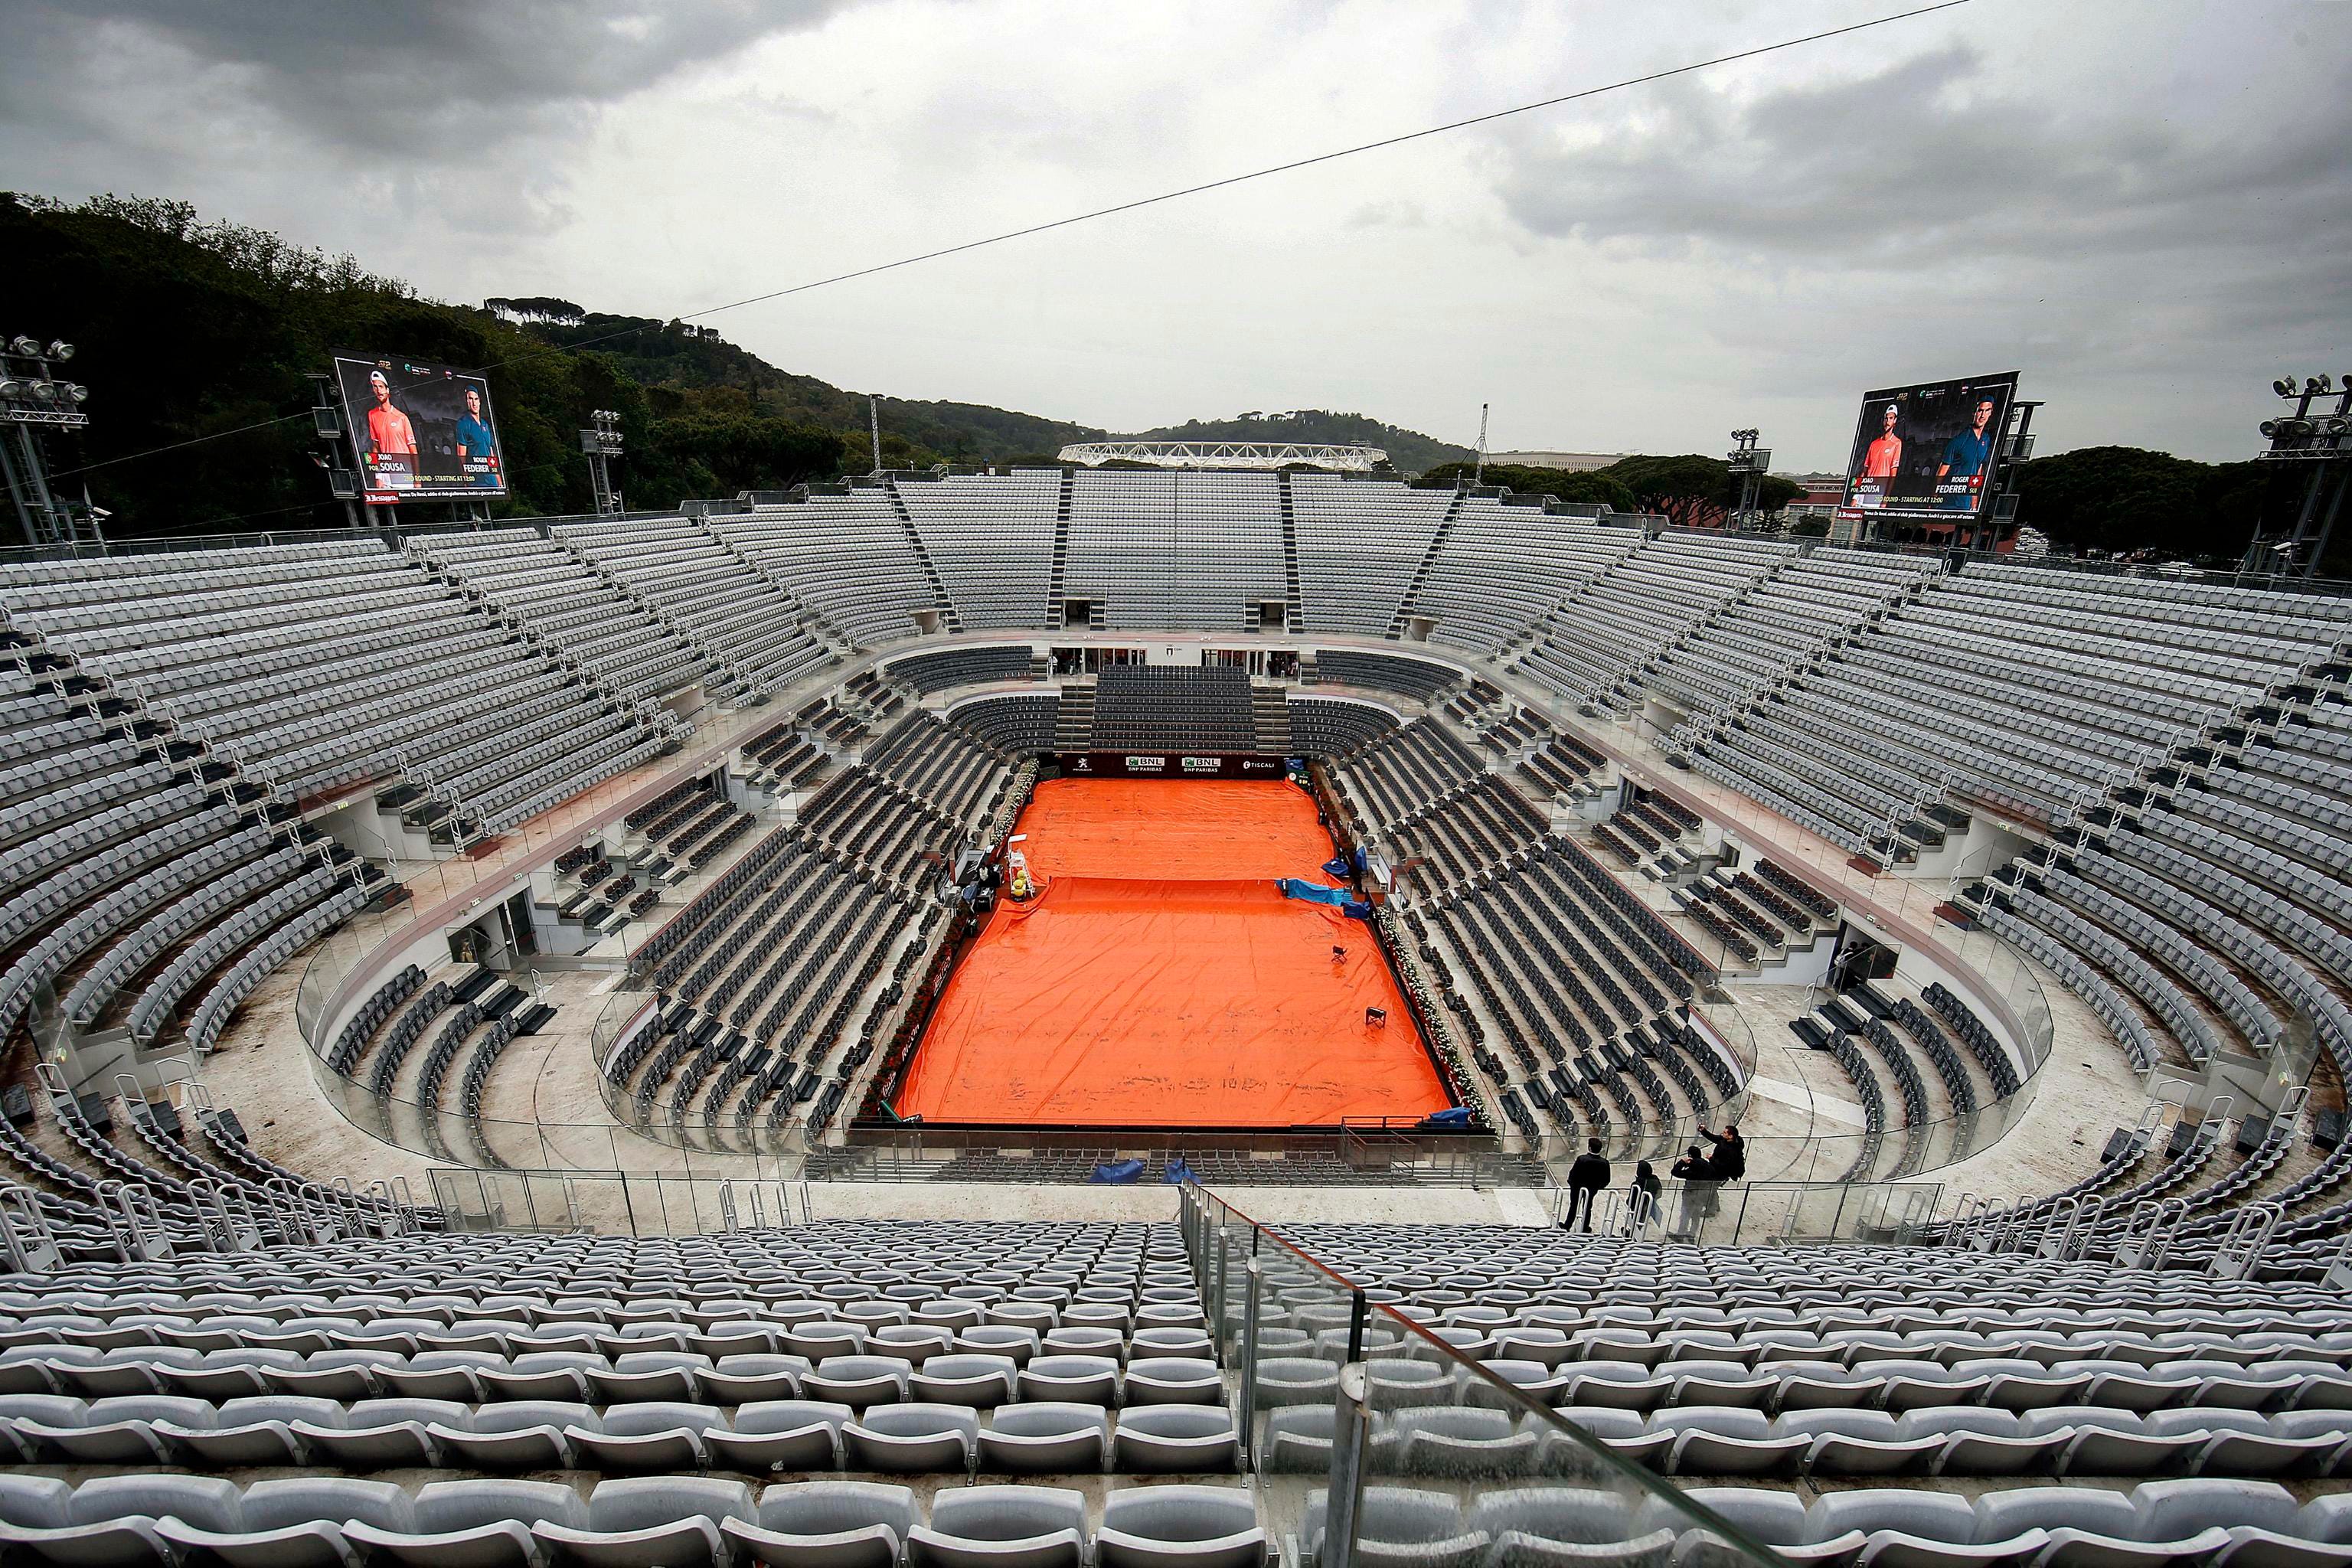 PRO TENNIS NEWS | Rain postpones Federer, Nadal and Djokovic in Rome; Sharapova out of French Open